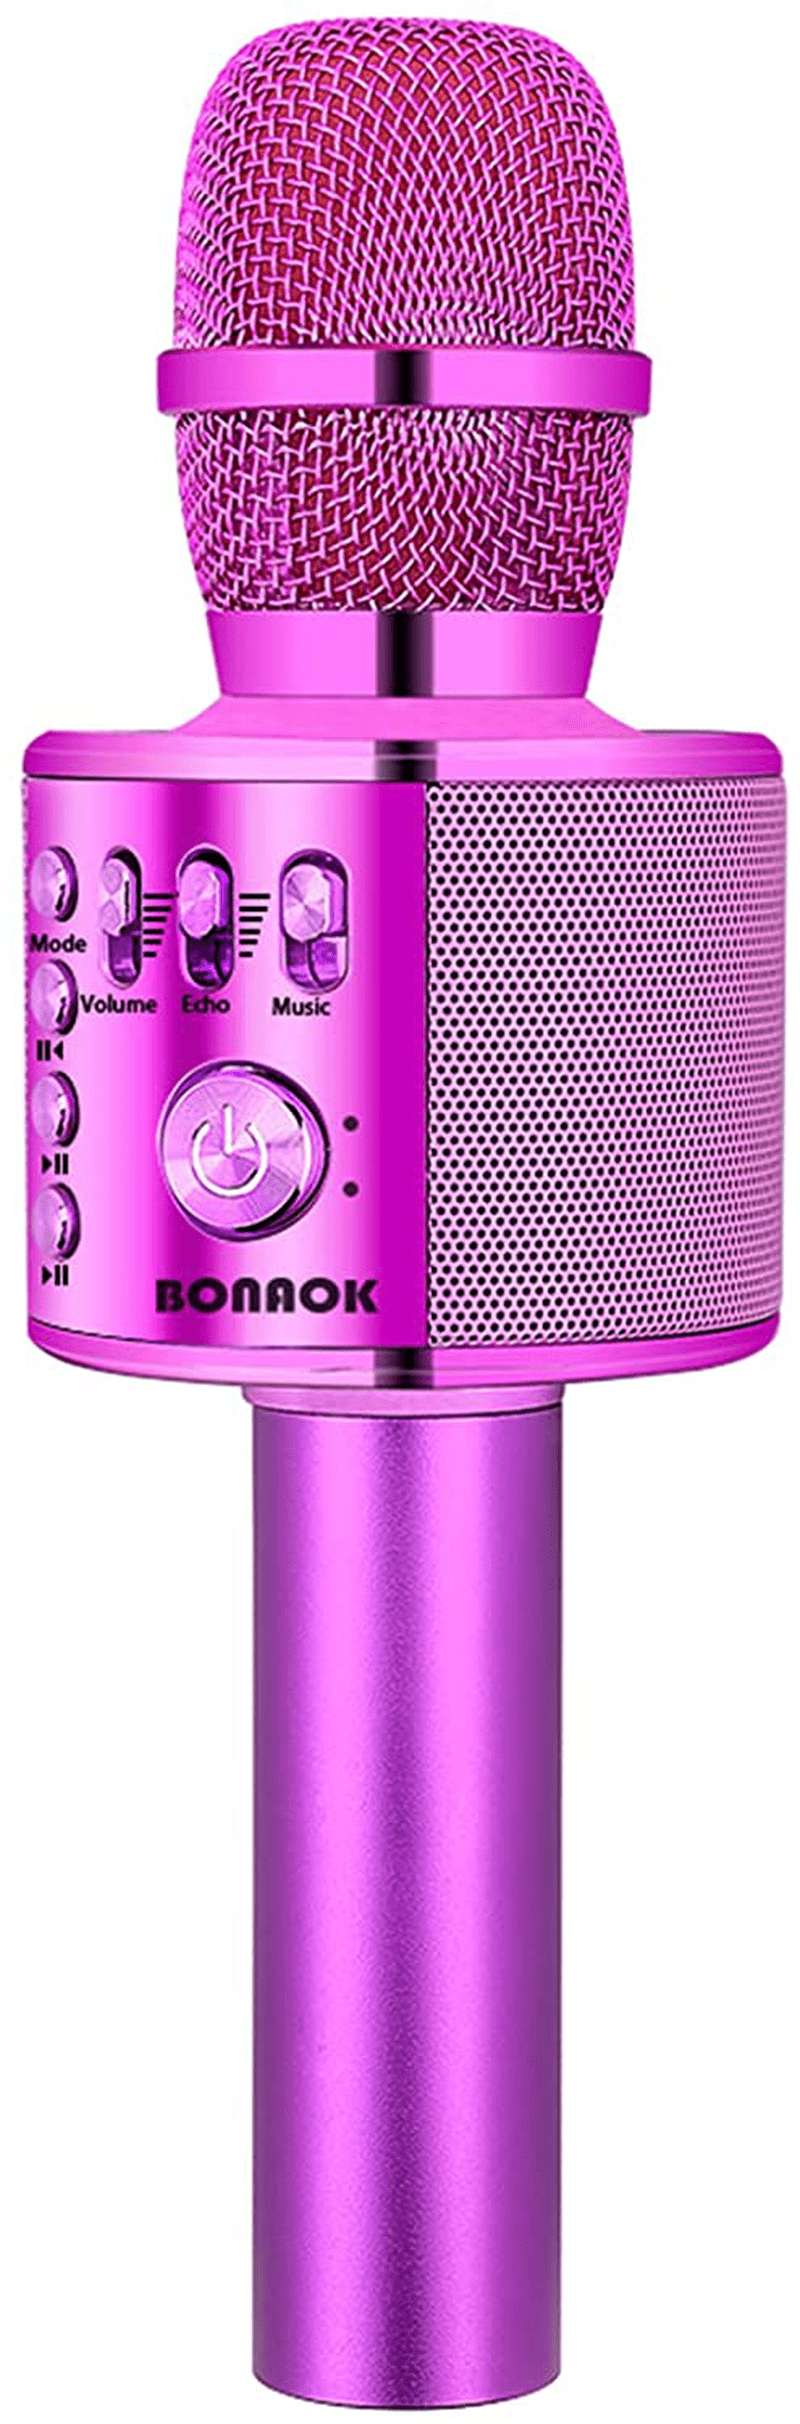 BONAOK Wireless Bluetooth Karaoke Microphone,3-in-1 Portable Handheld Karaoke Mic Speaker Machine Home Party Birthday for All Smartphones PC(Q37 Rose Gold) Electronics > Audio > Audio Components > Microphones BONAOK purple  